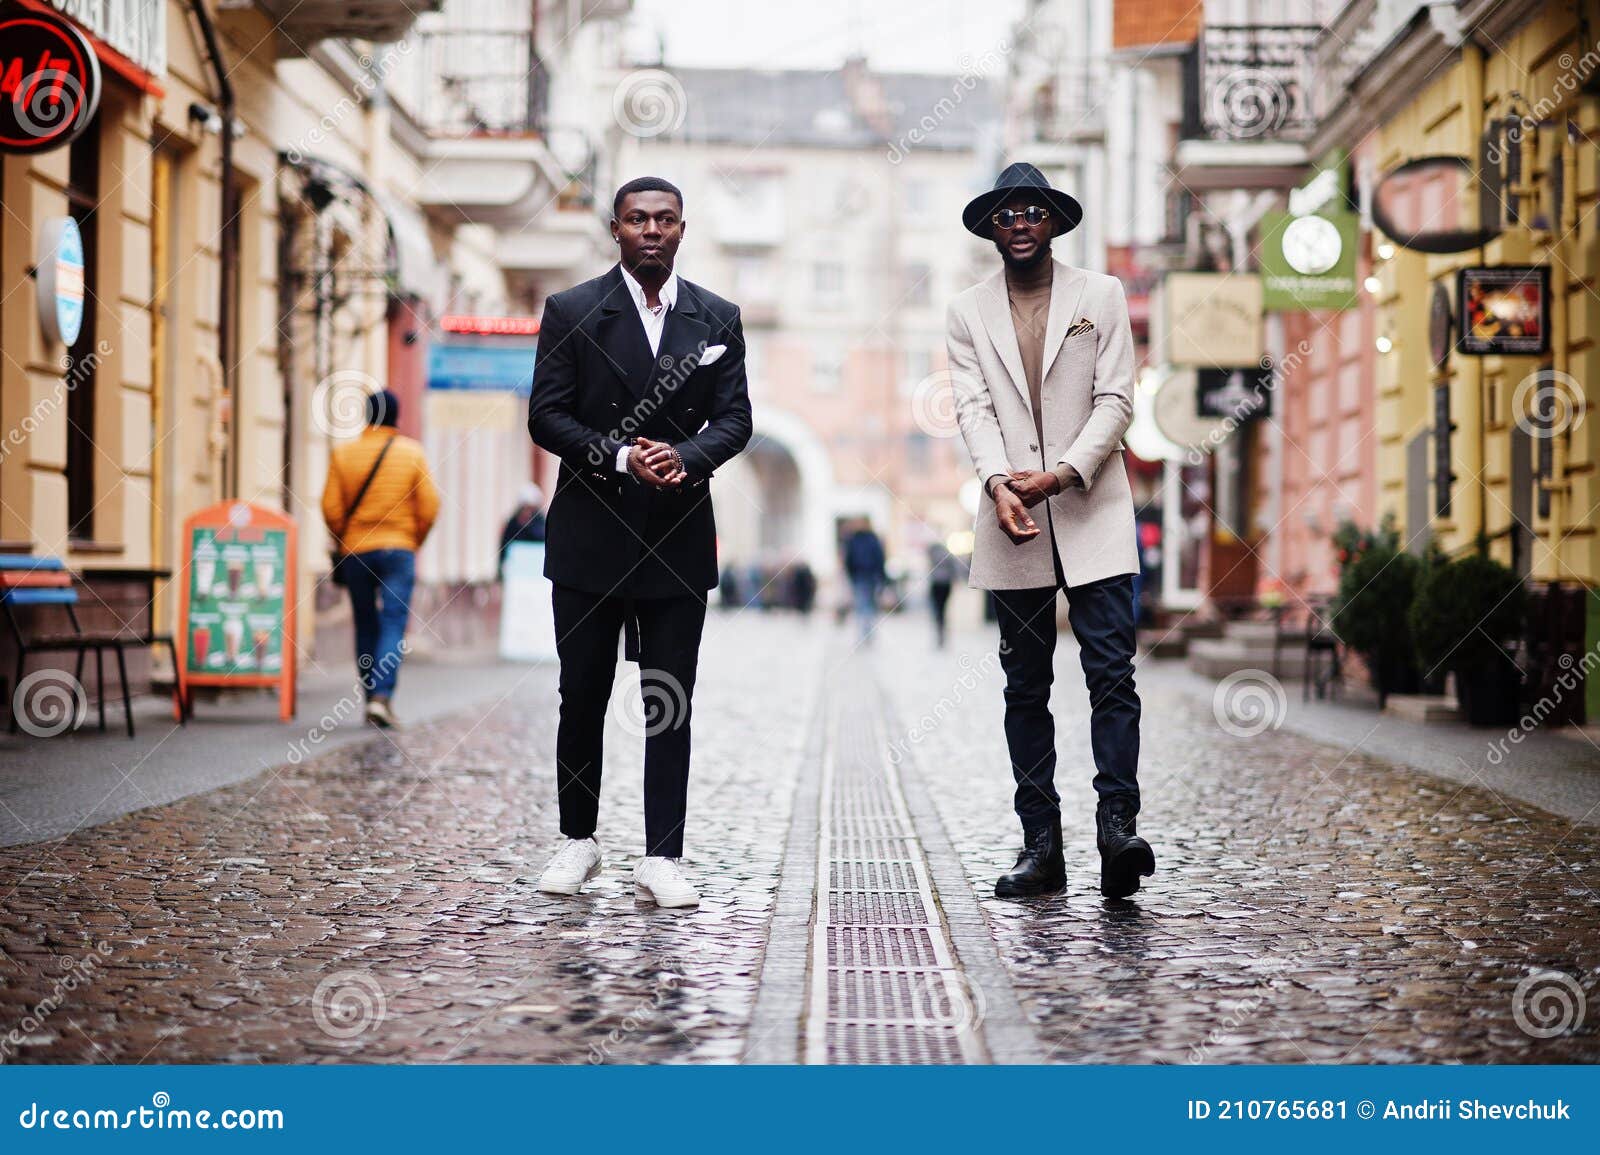 two fashion black men walking on street. fashionable portrait of african american male models. wear suit, coat and hat